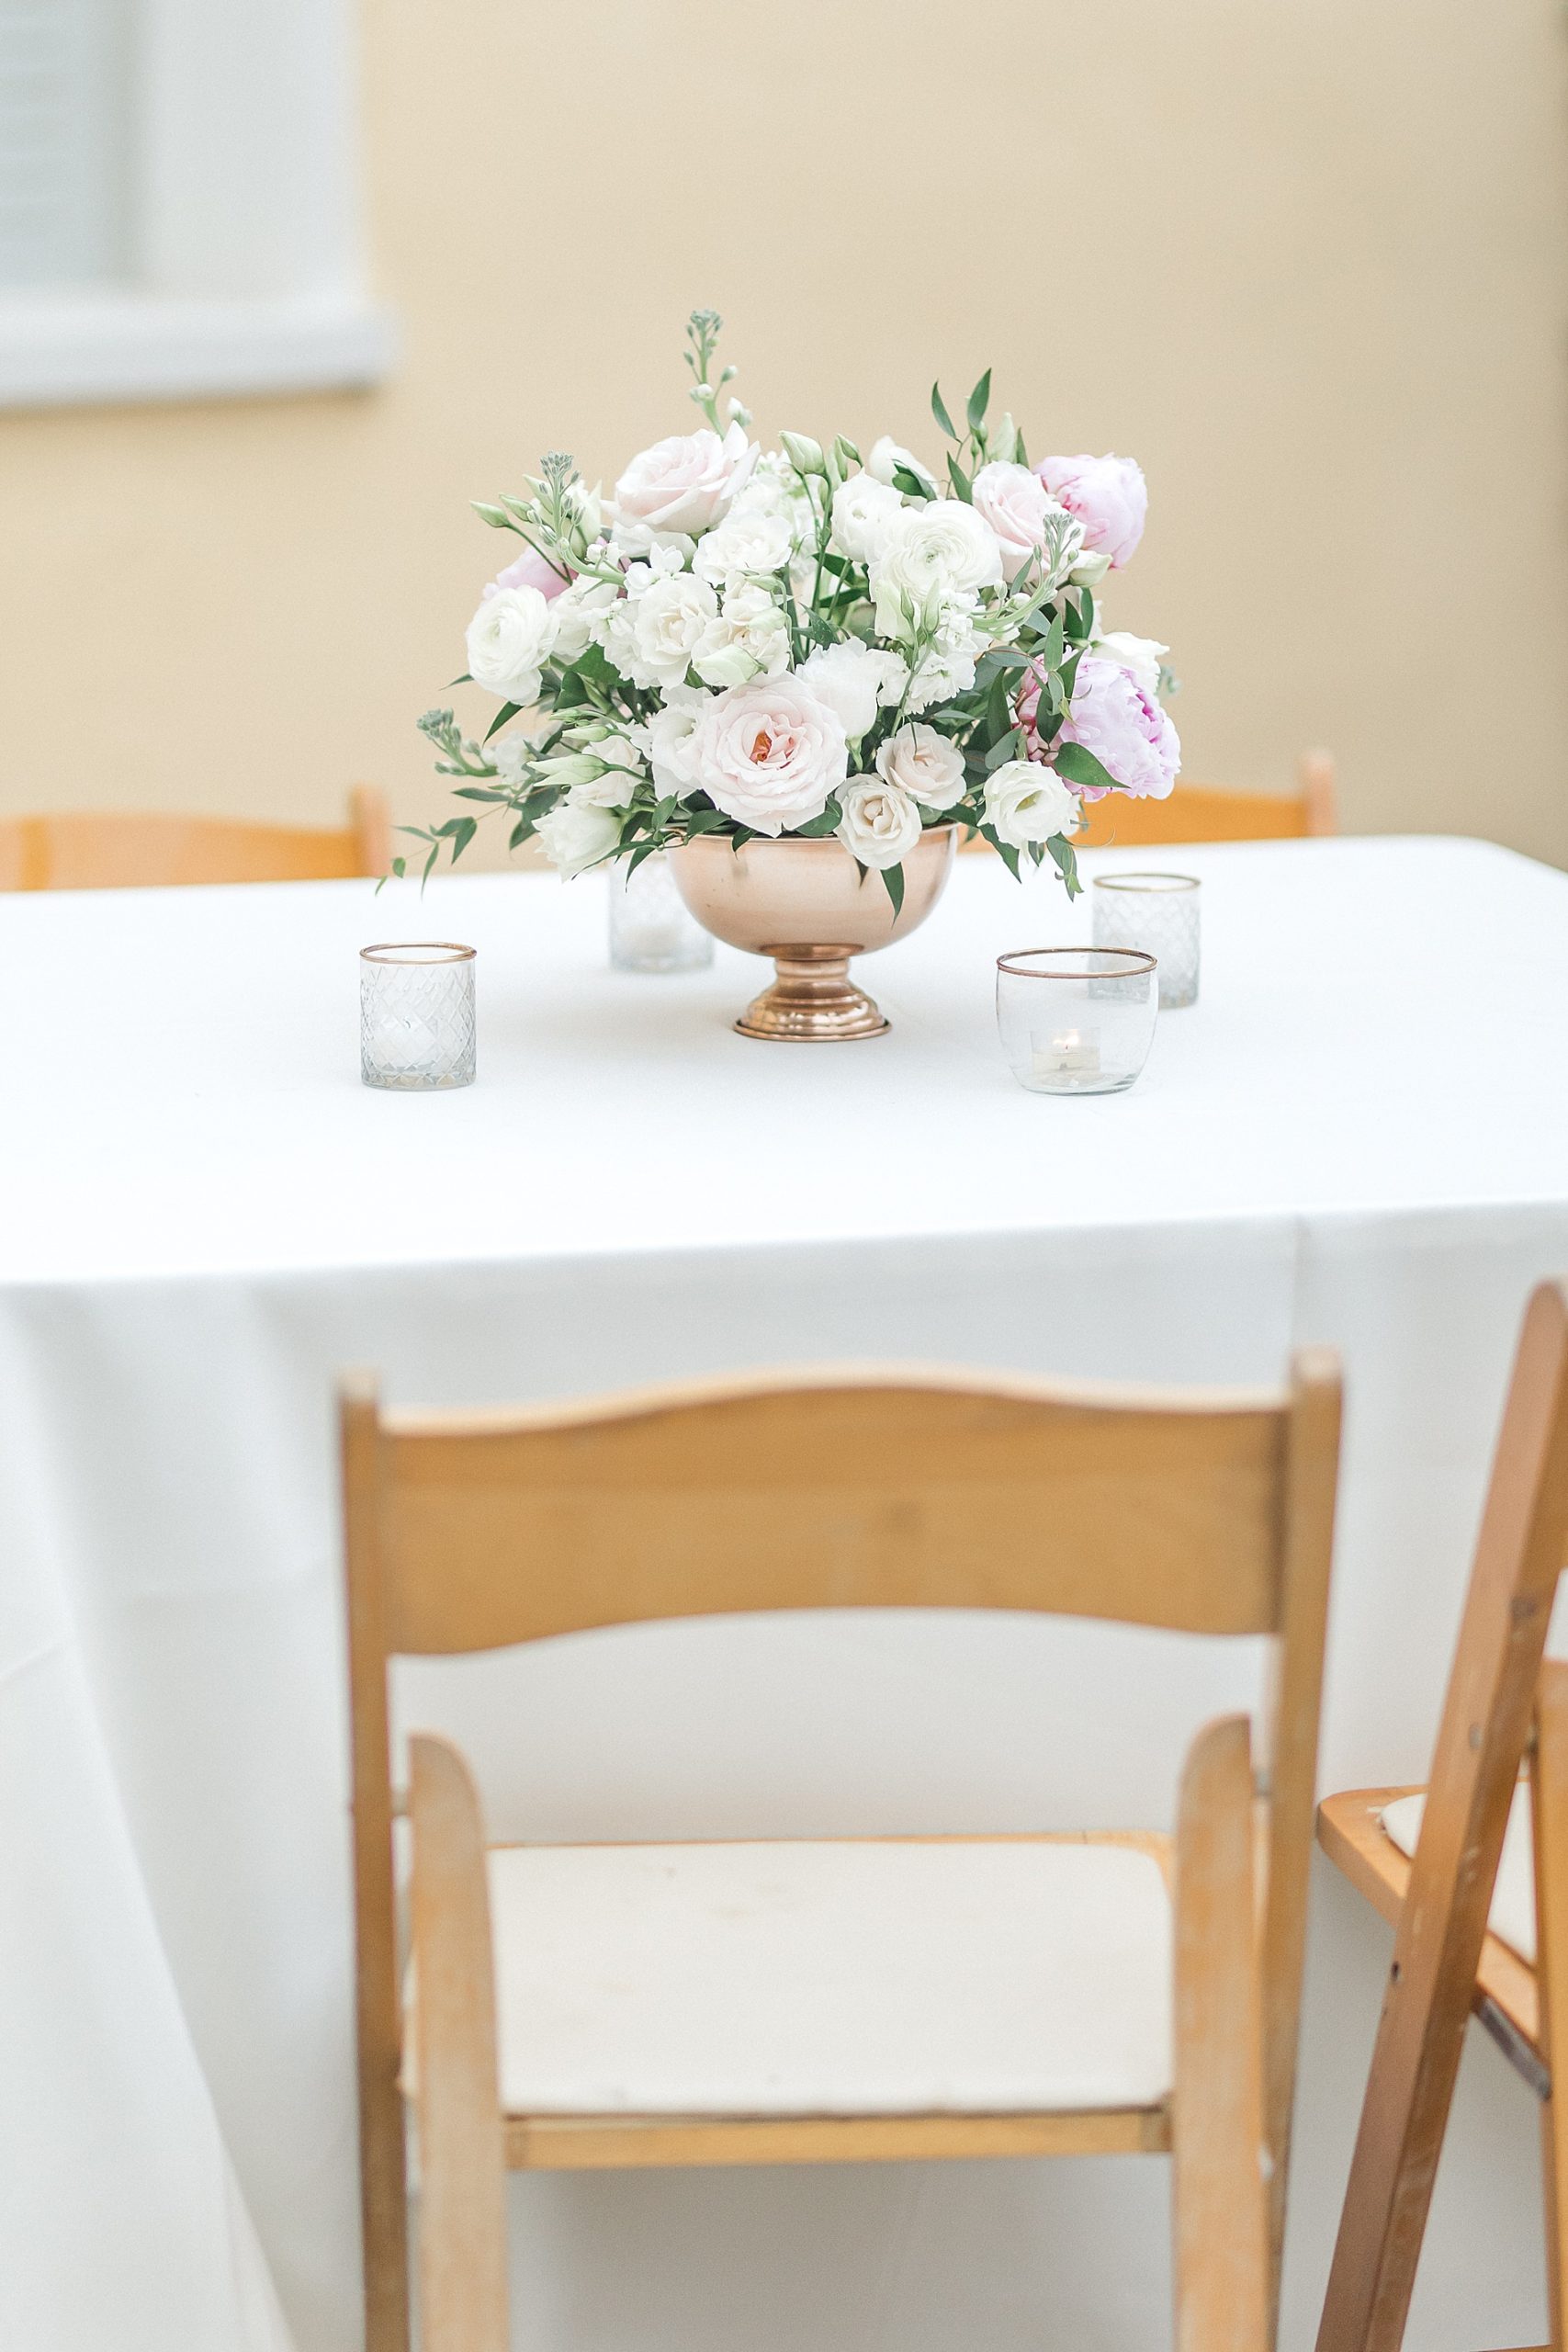 light-colored flower arrangements on center of tables